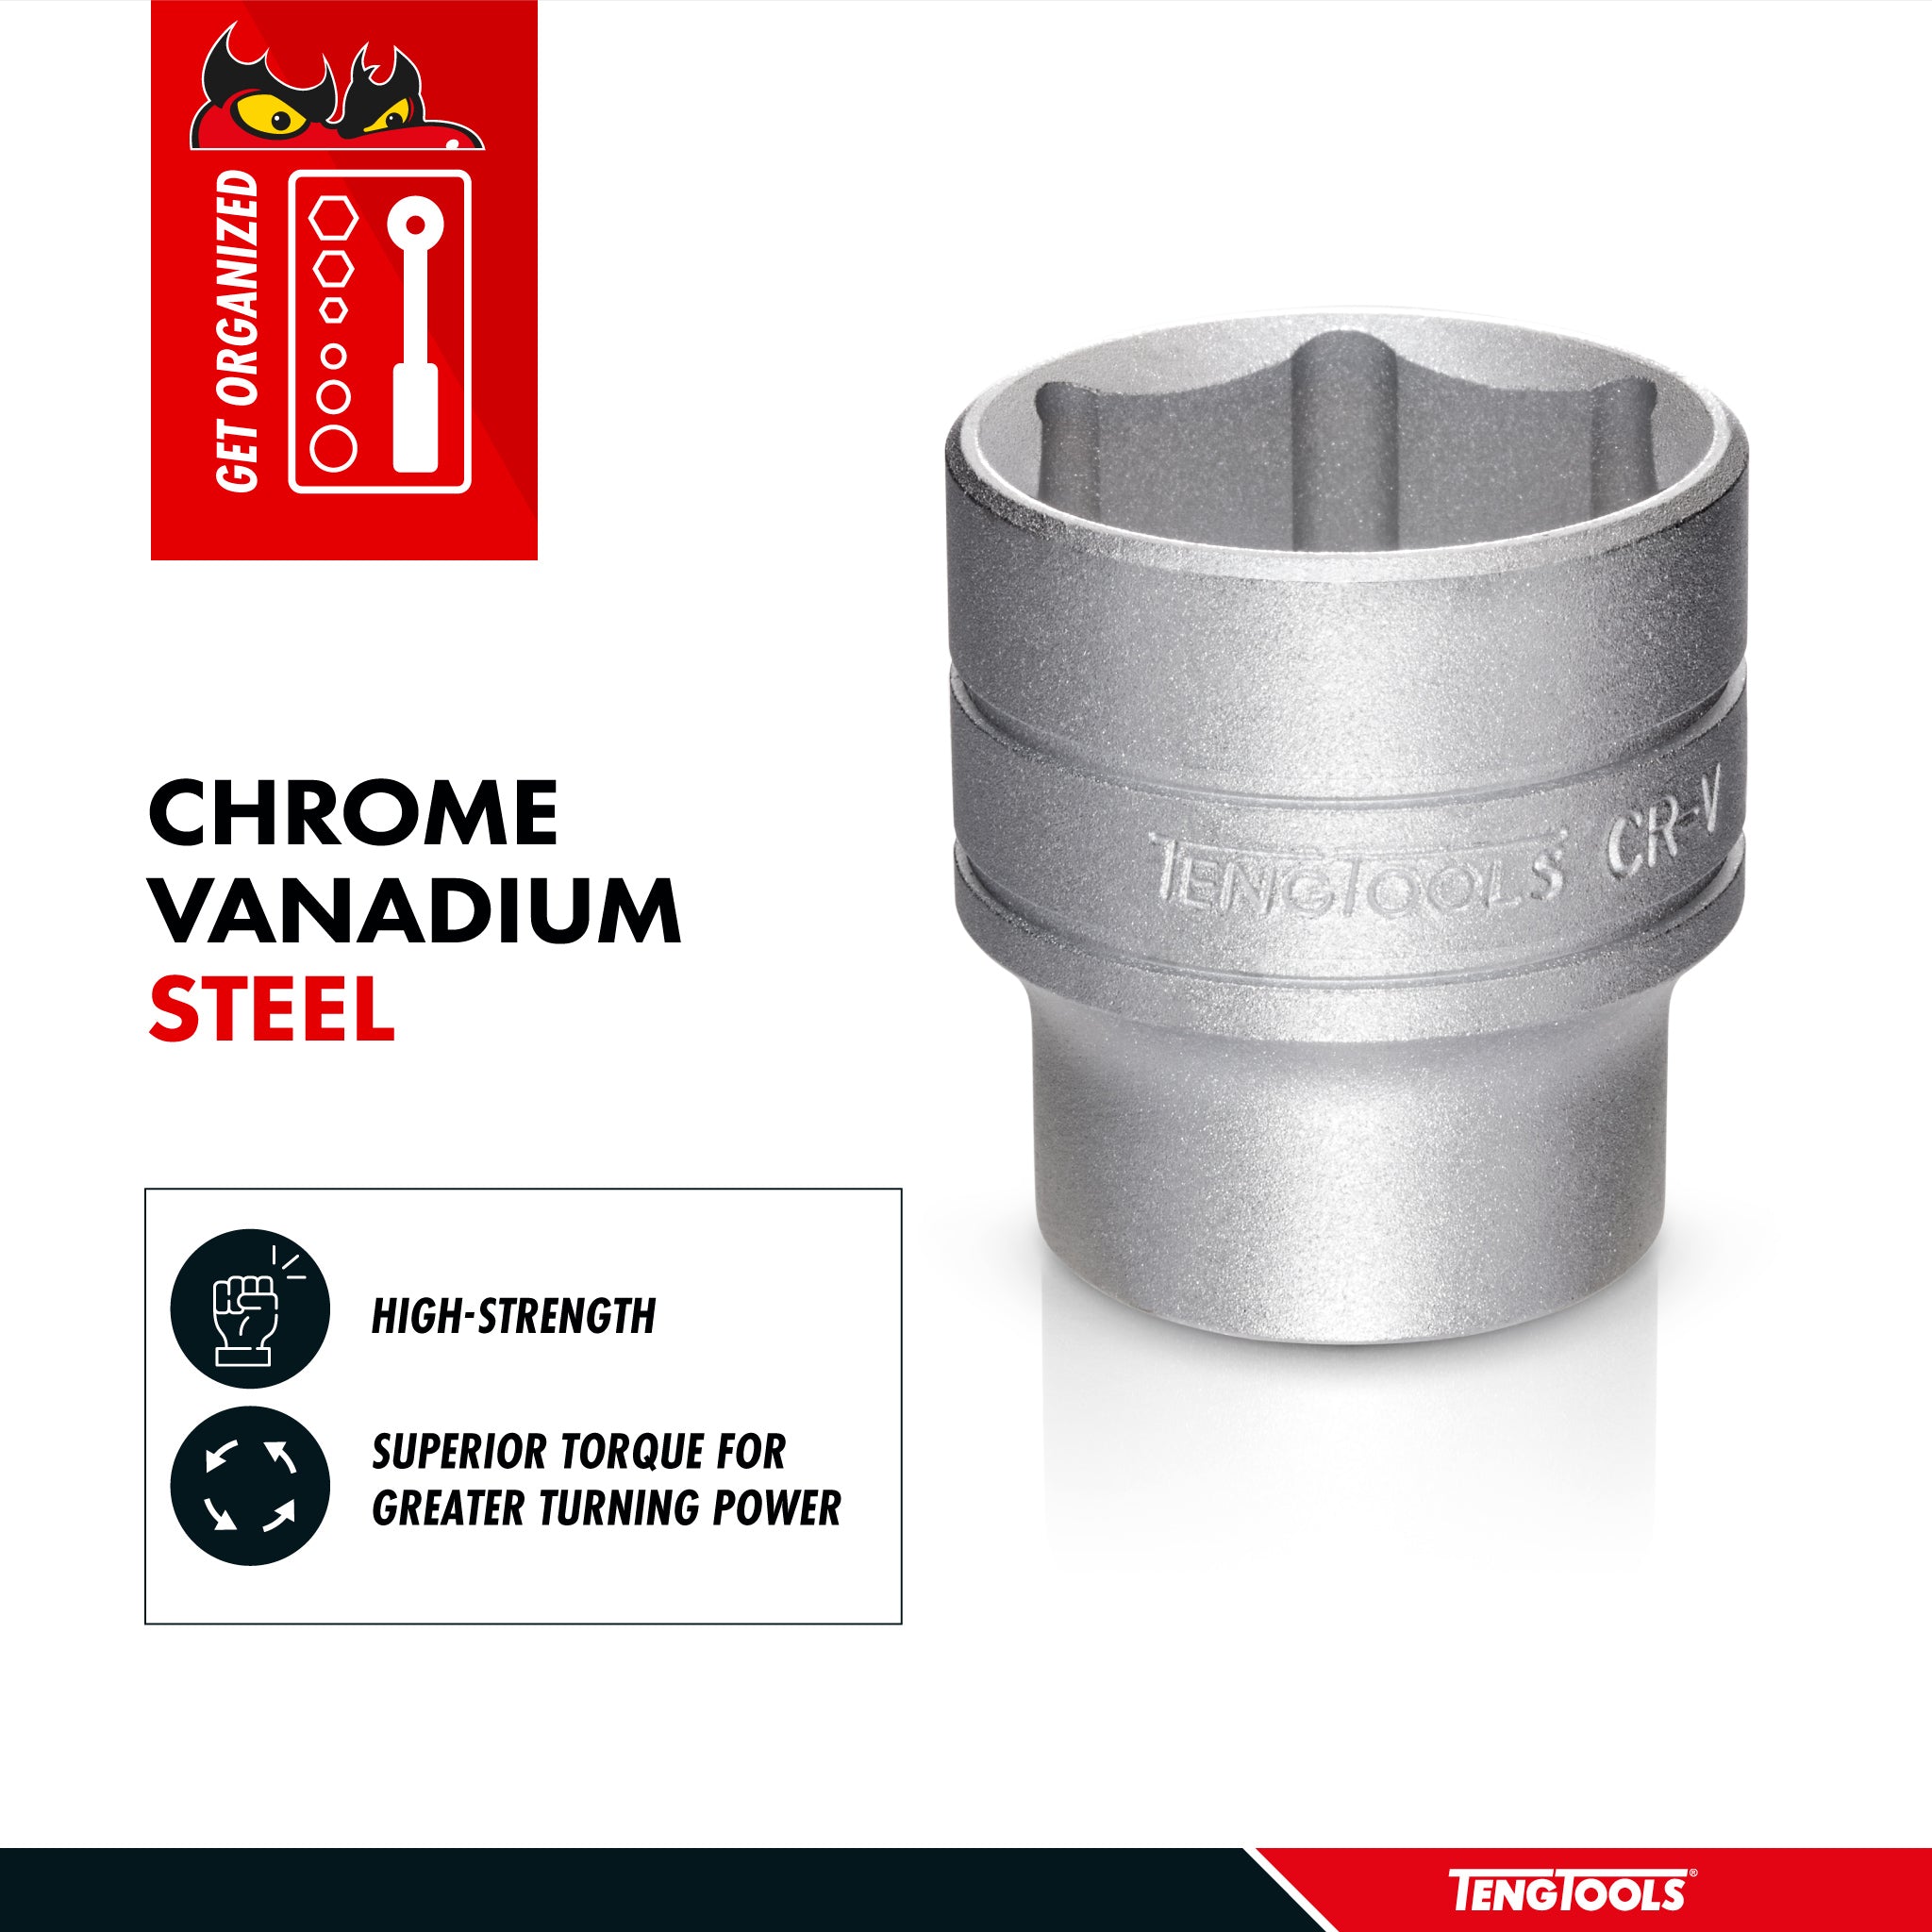 Teng Tools 3/8 Inch Drive 6 Point Metric Shallow Chrome Vanadium Sockets - 10mm